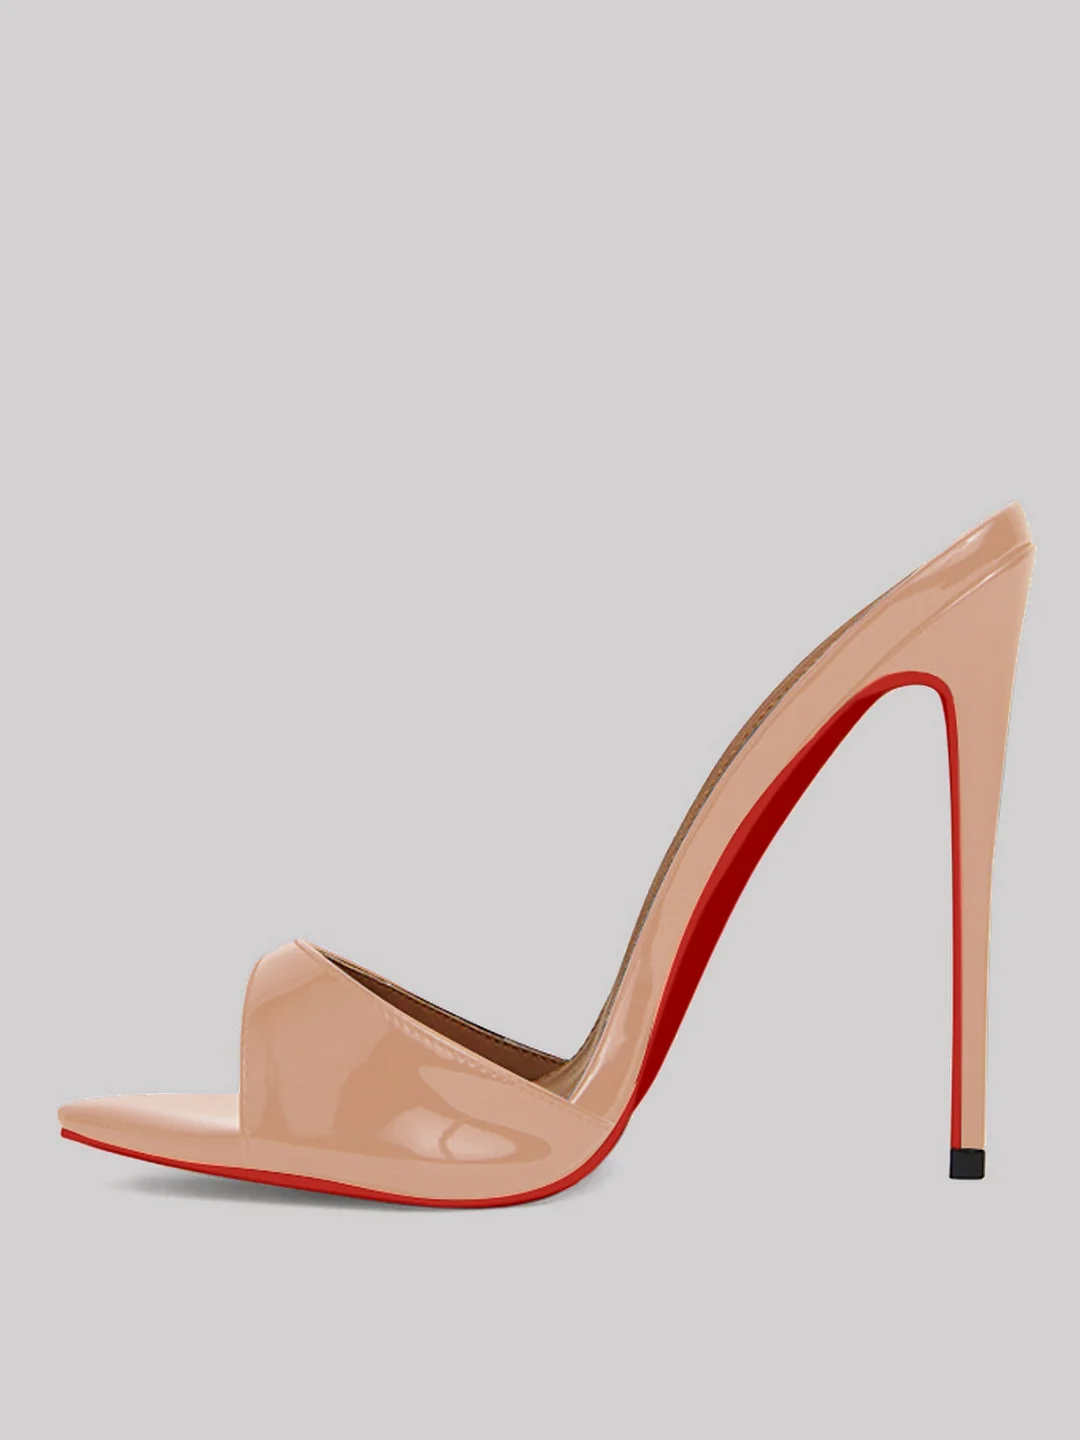 85mm Women's Open Toe Sandals Stiletto Red Bottom High Heels Vegan Mules Patent Shoes